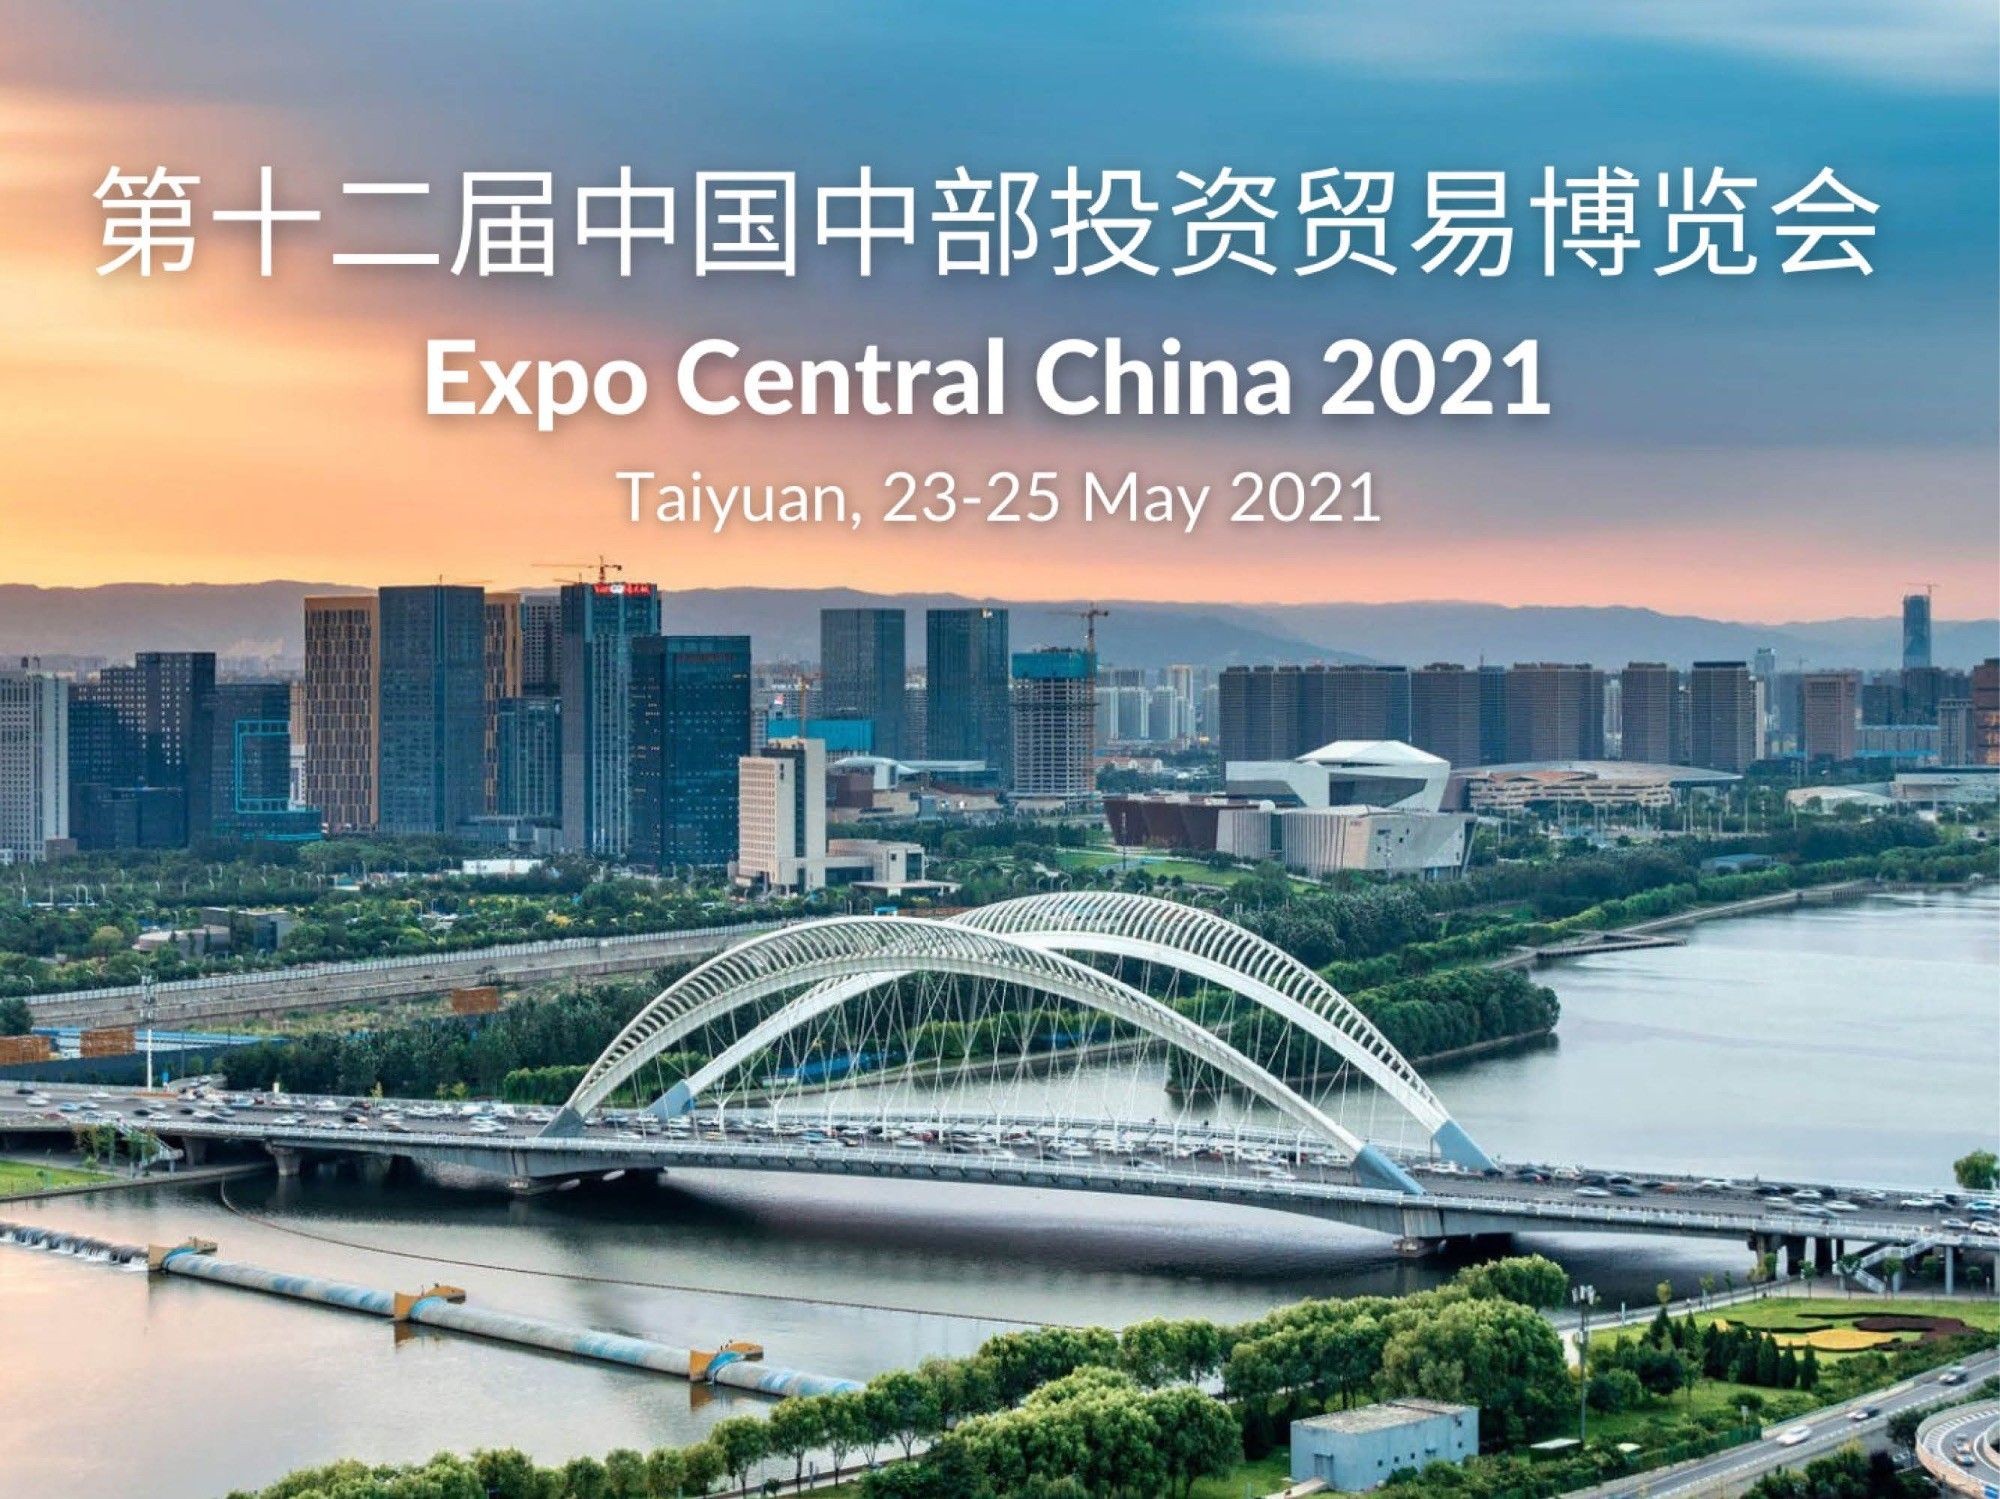 Expo Central China 2021